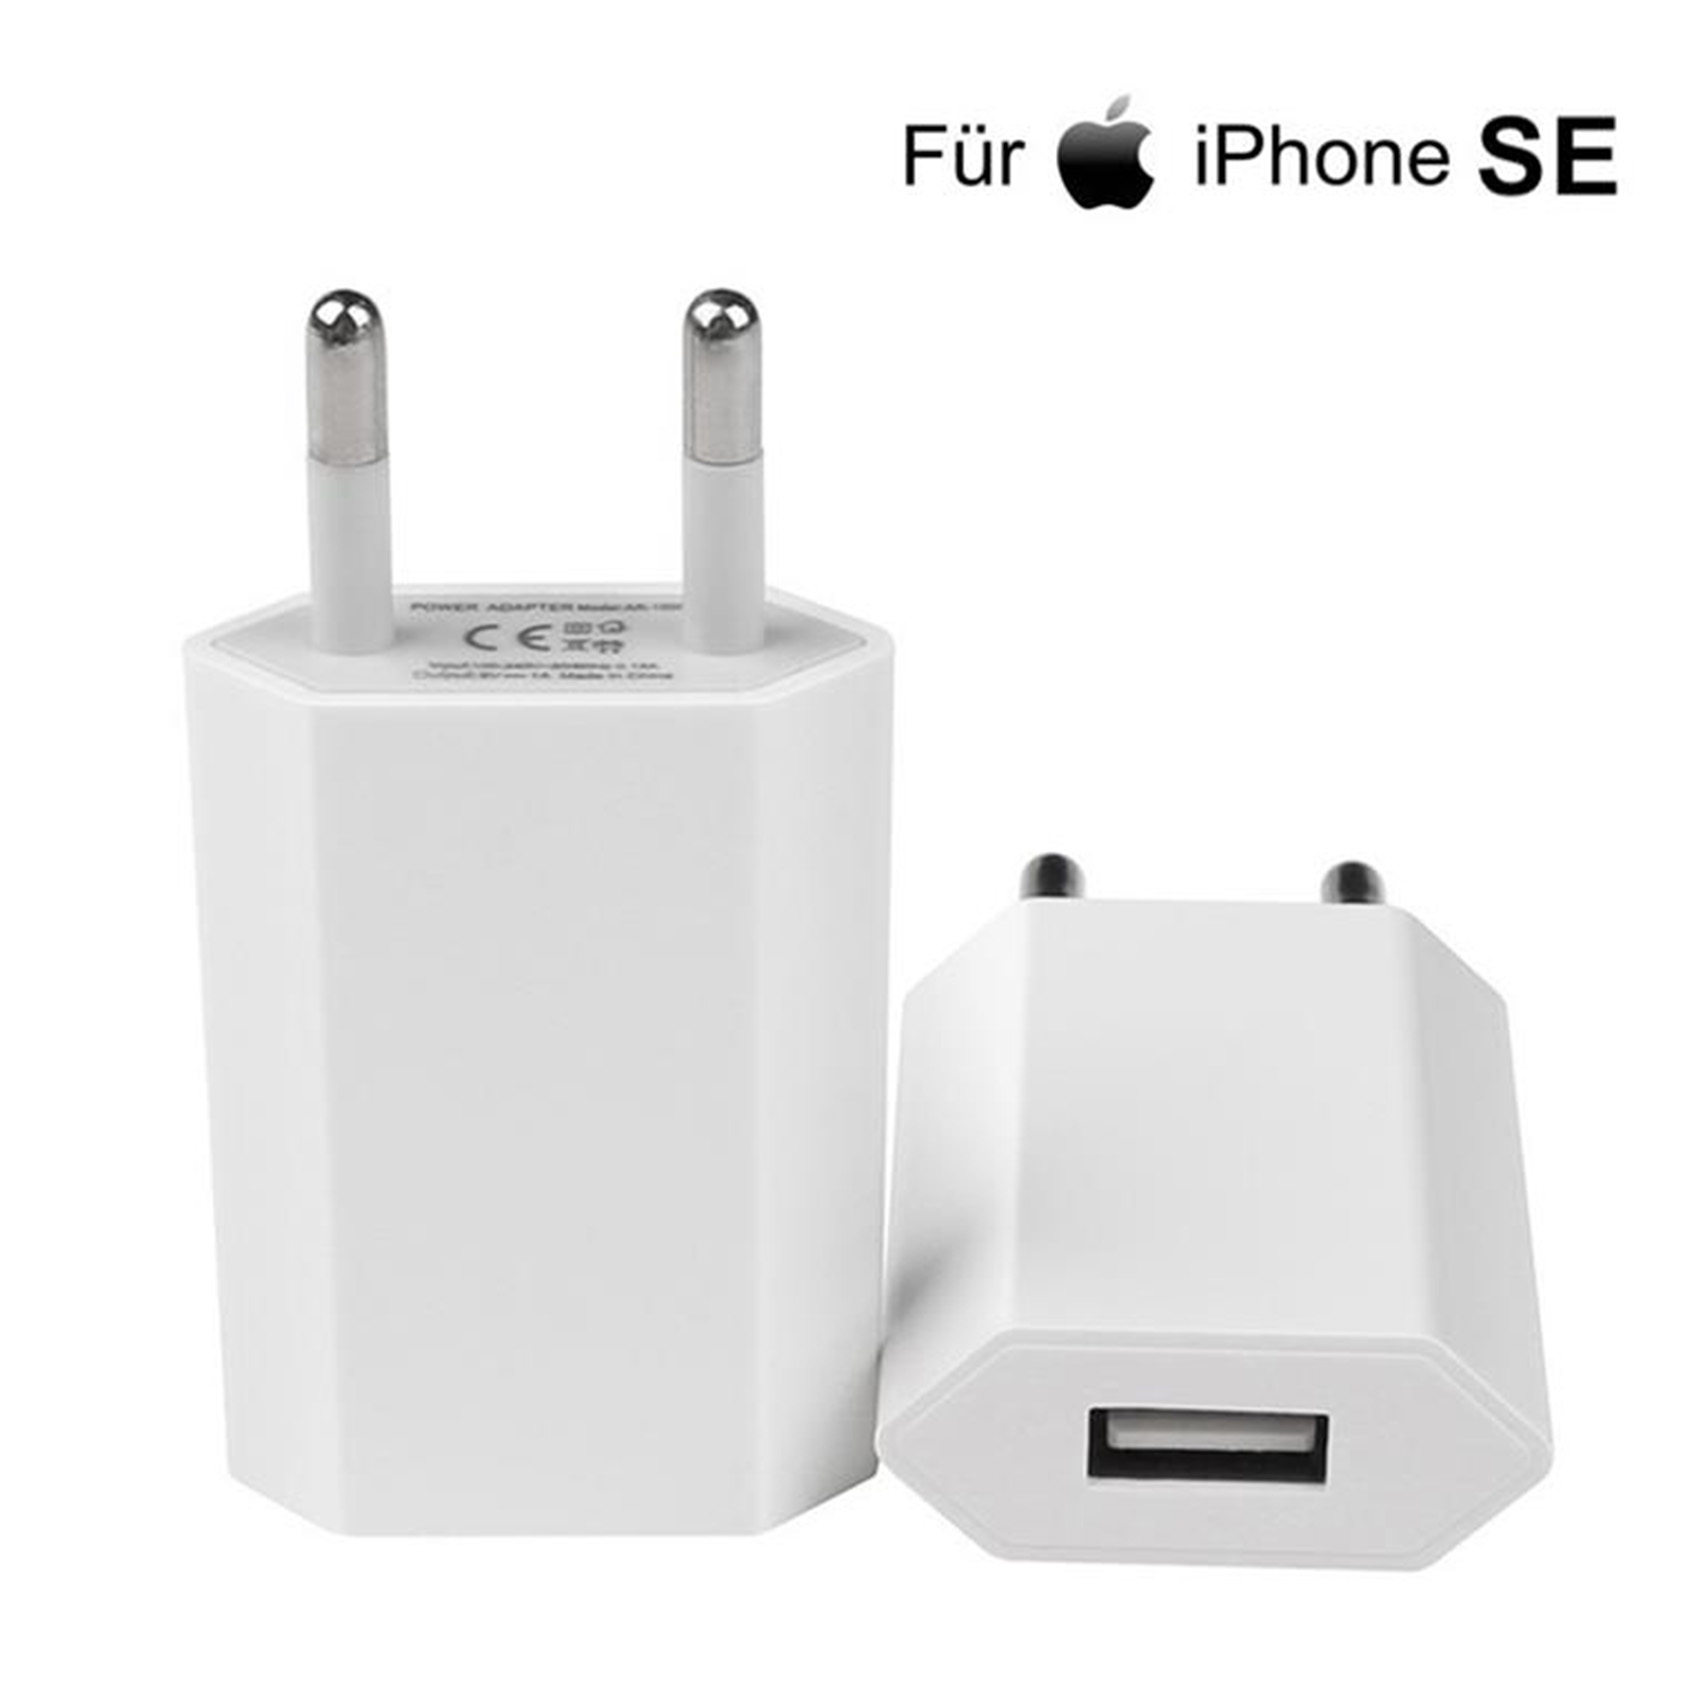 iPhone SE 5W USB Power Adapter